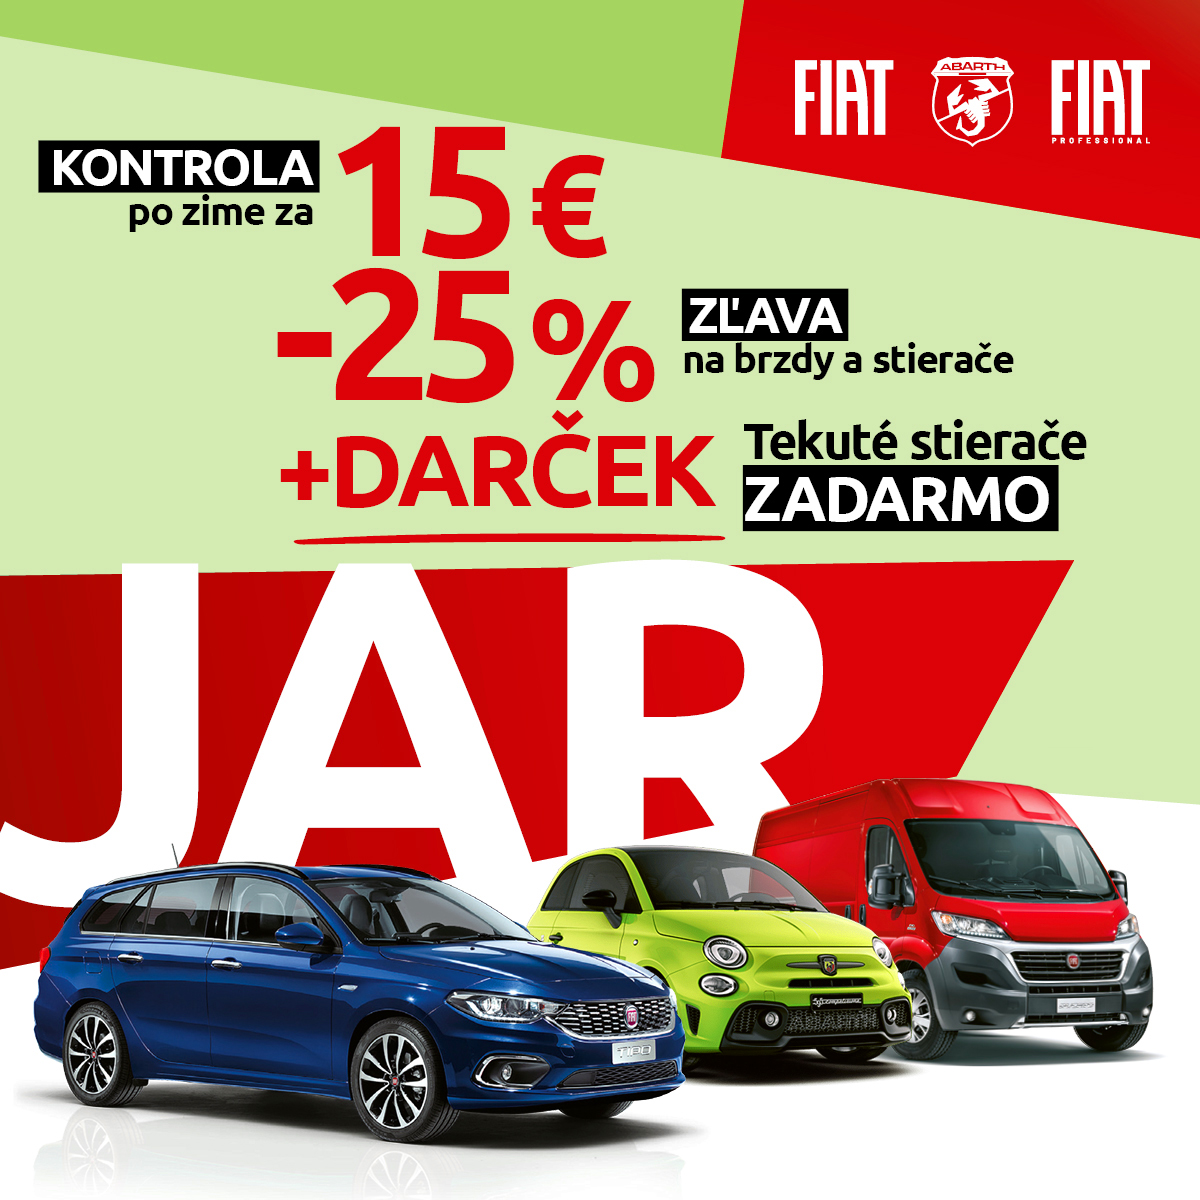 Jarný servis značiek Fiat a Fiat Professional